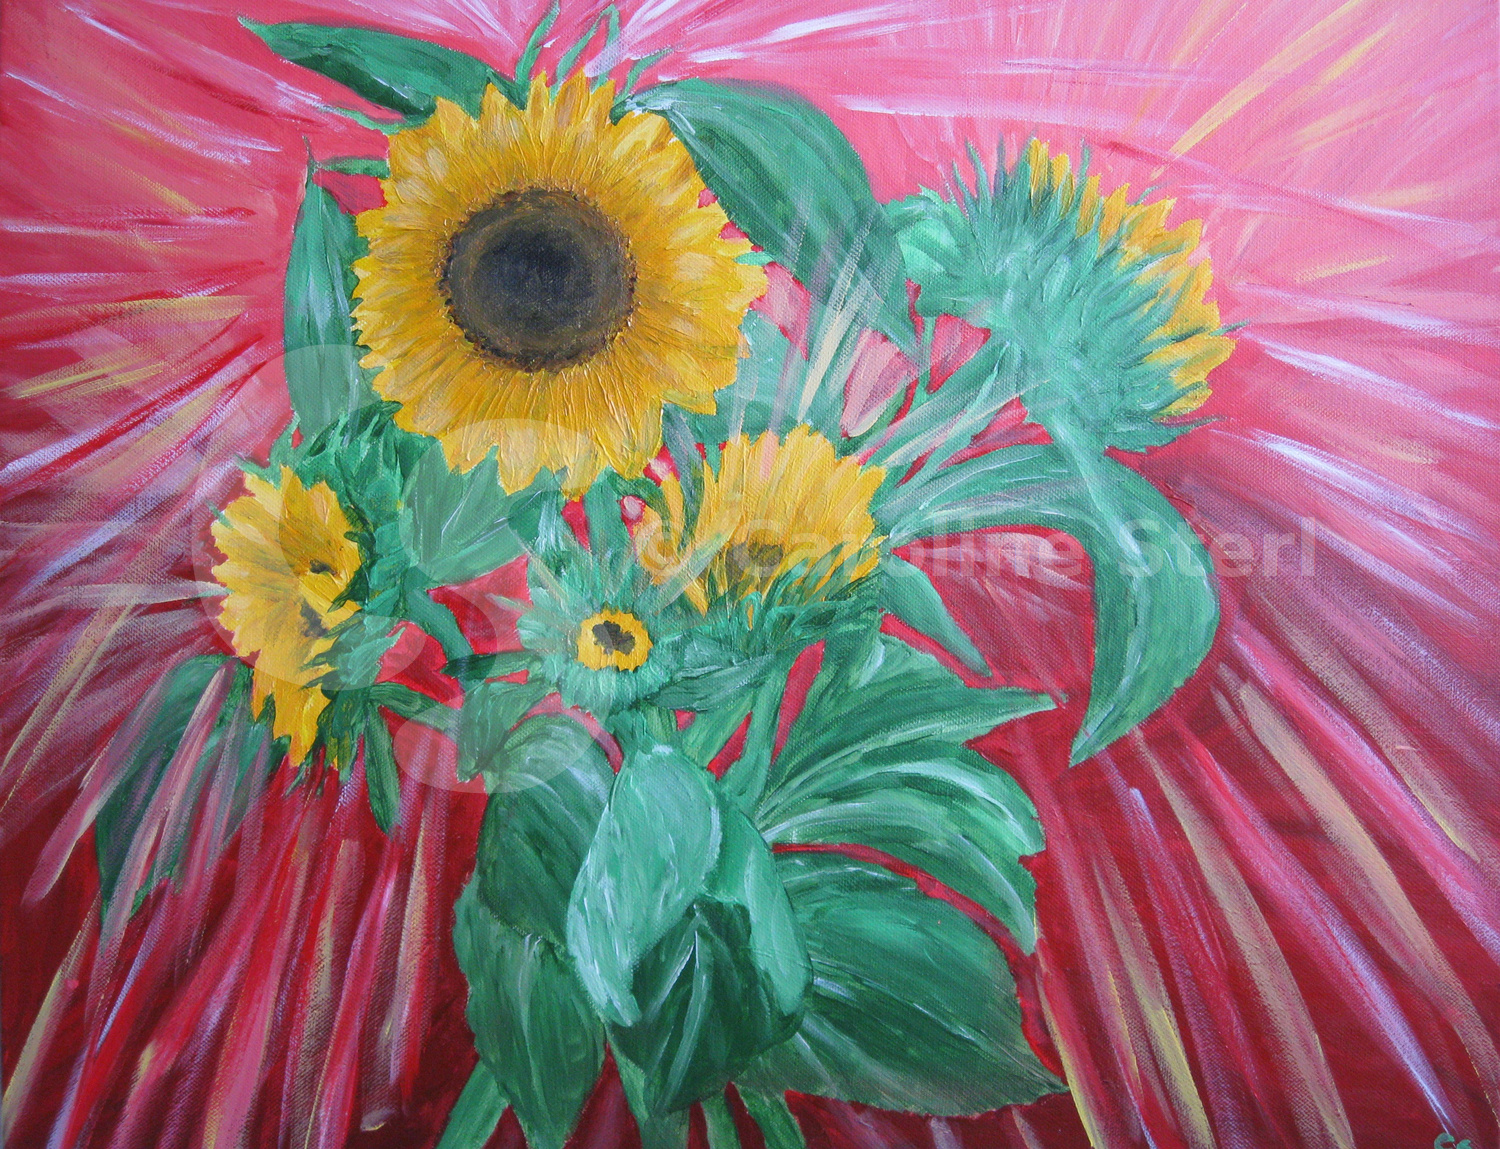 Painting: My Sunflowers